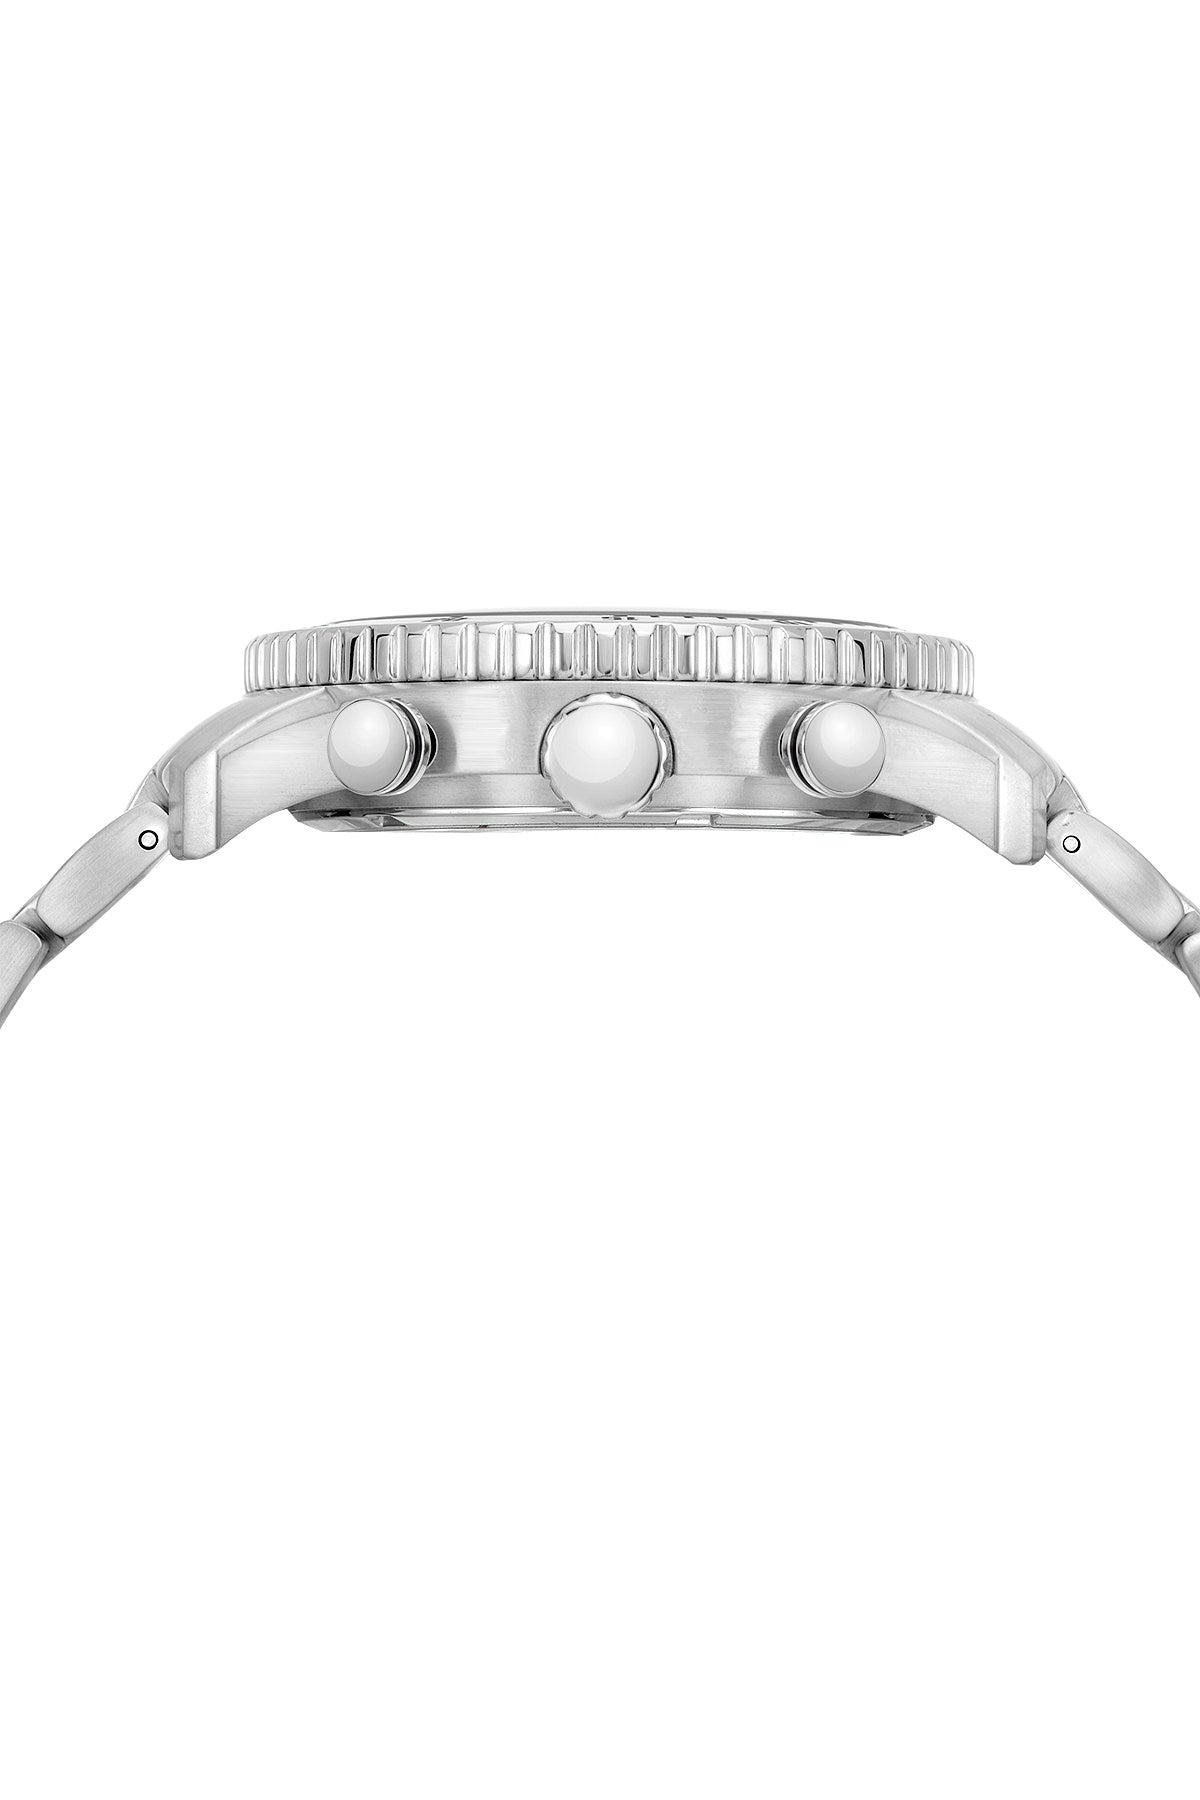 Porsamo Bleu Taylor luxury chronograph men's stainless steel watch, silver 621ATAS